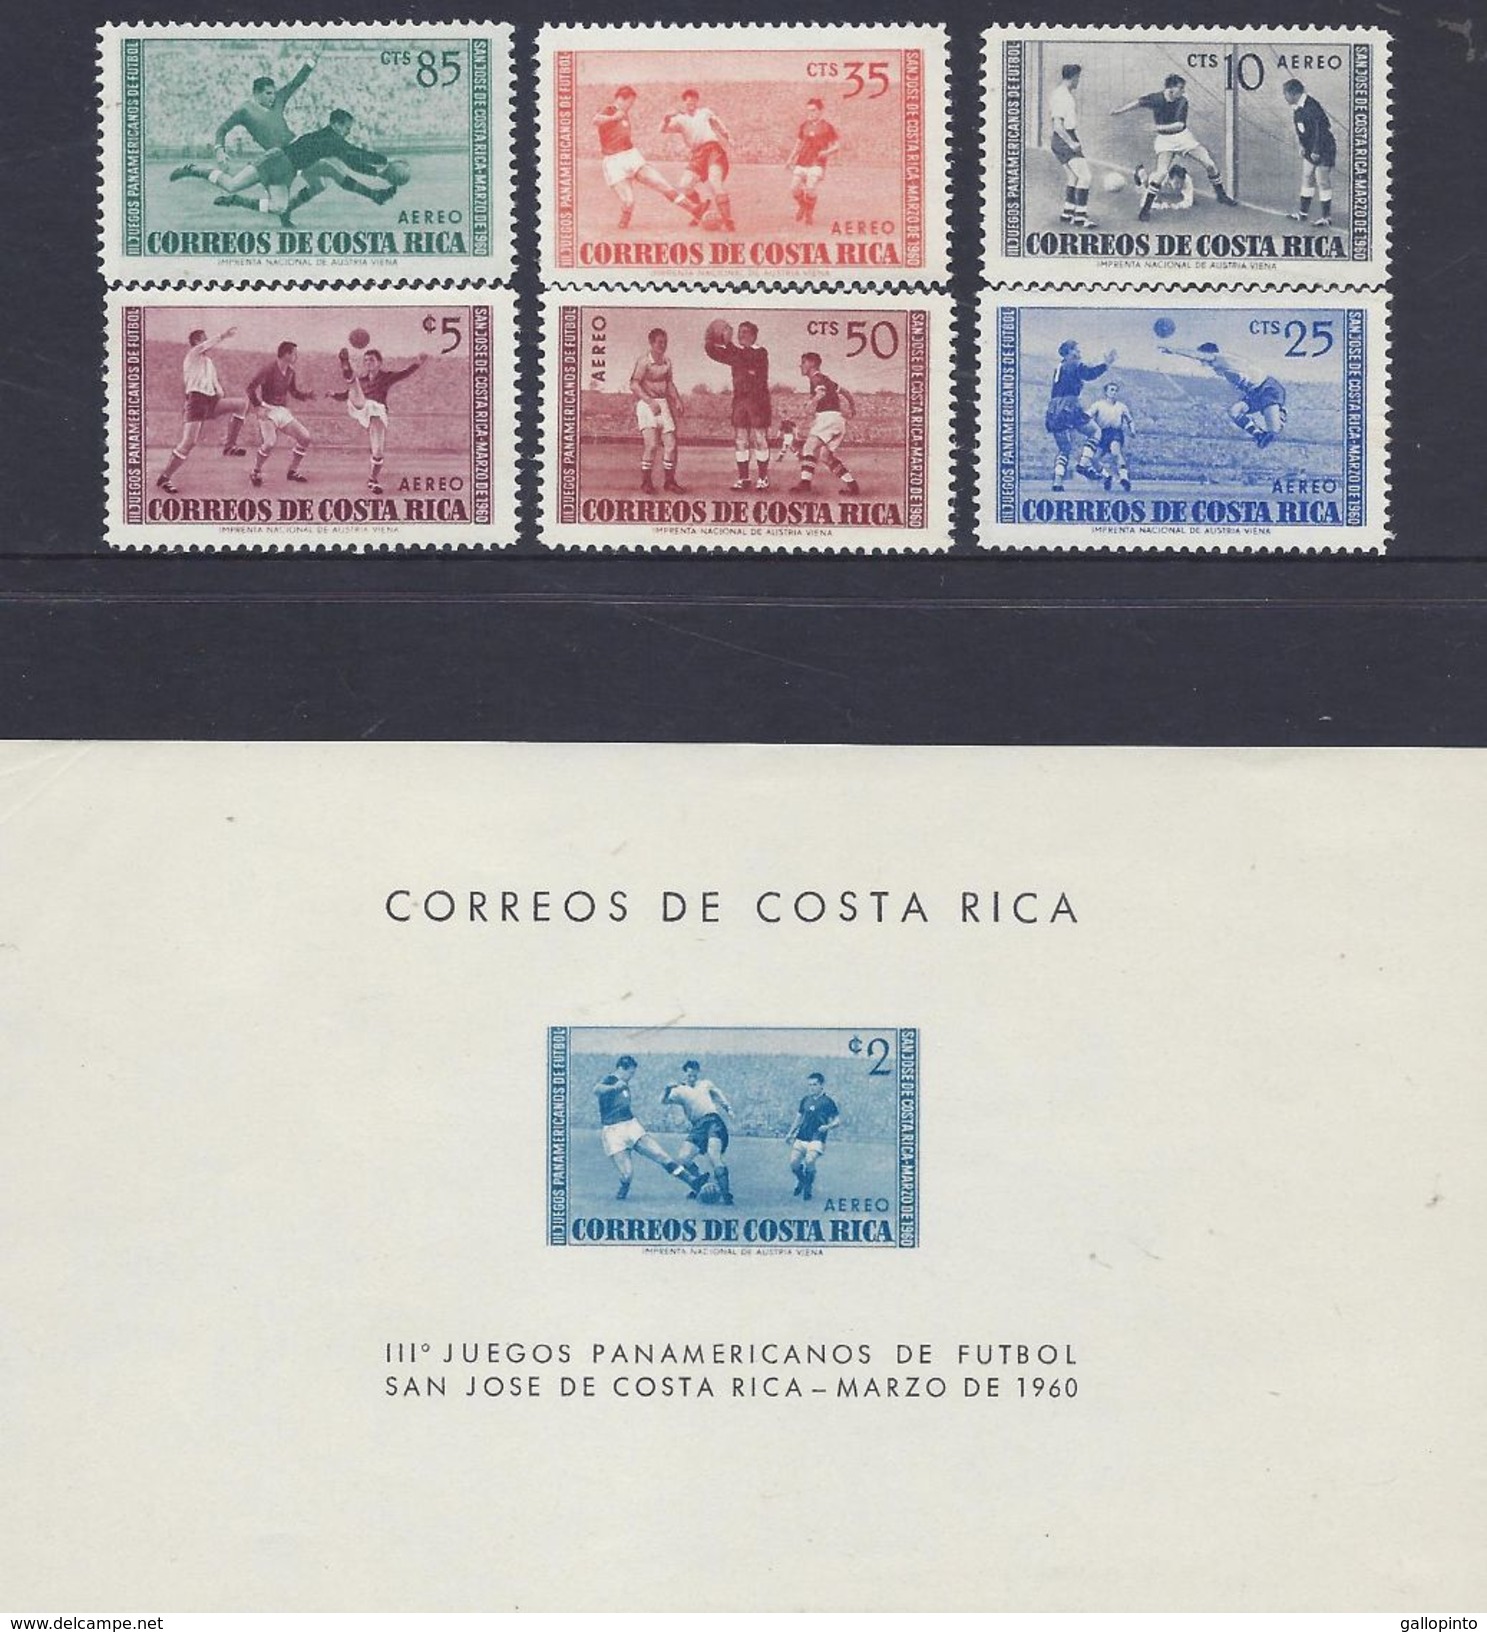 COSTA RICA PAN-AMERICAN SOCCER GAMES, SAN JOSE Sc C283-C289 MLH 1960 - Fußball-Amerikameisterschaft